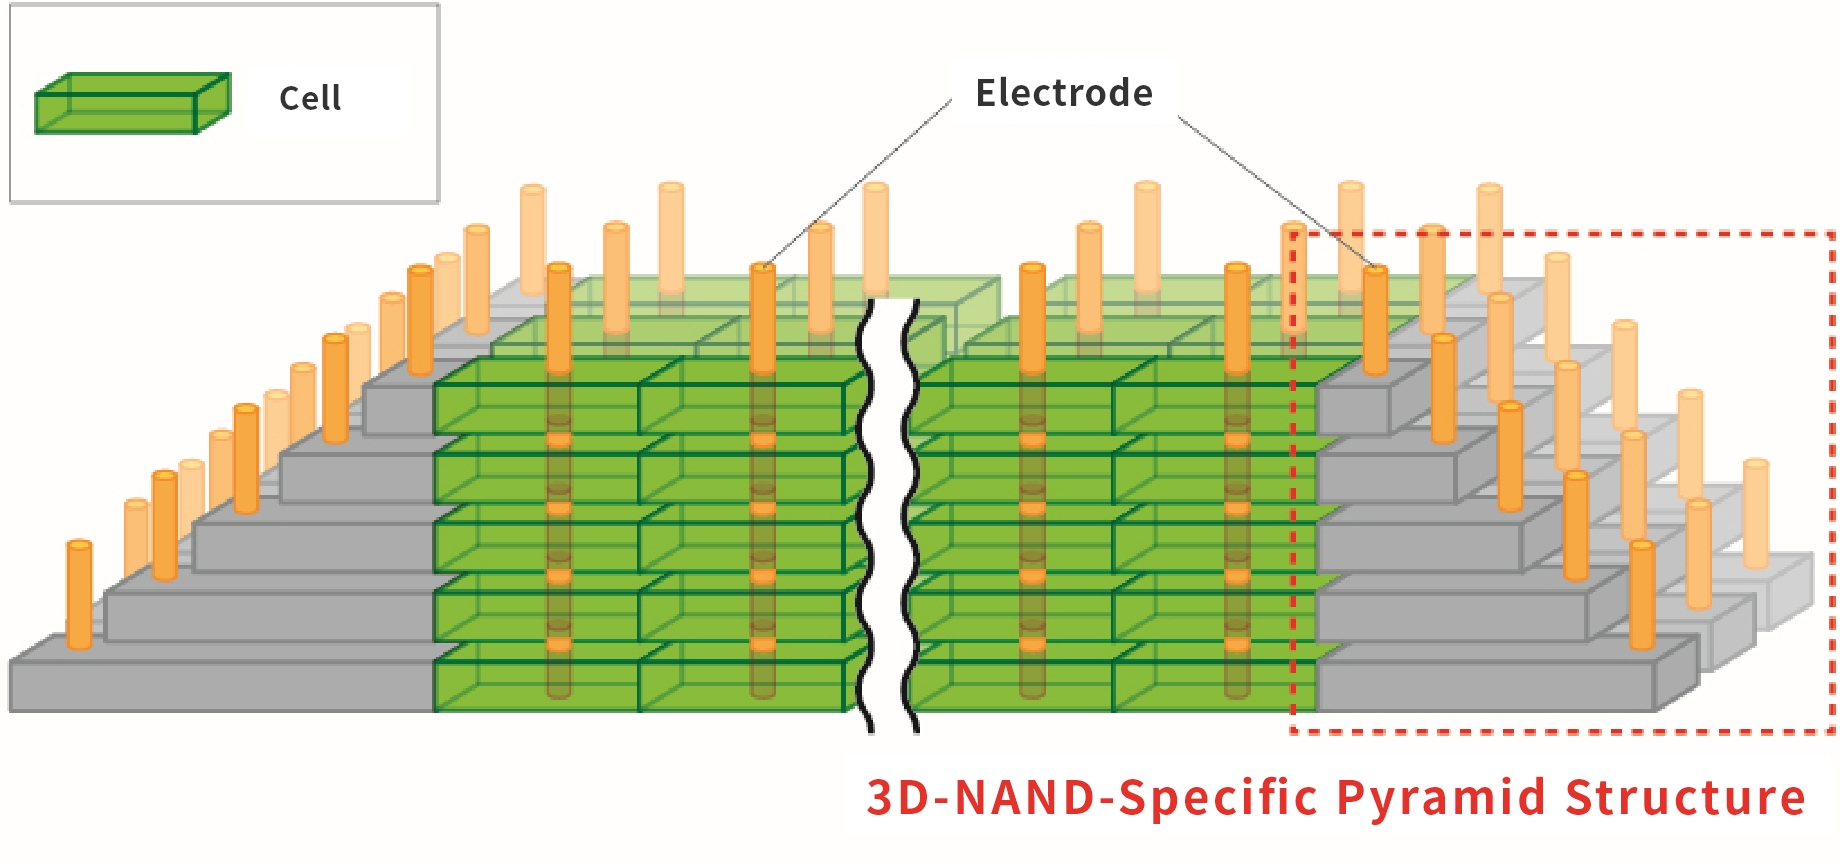 Fig. 3 - Basic Structural Image of 3D-NAND